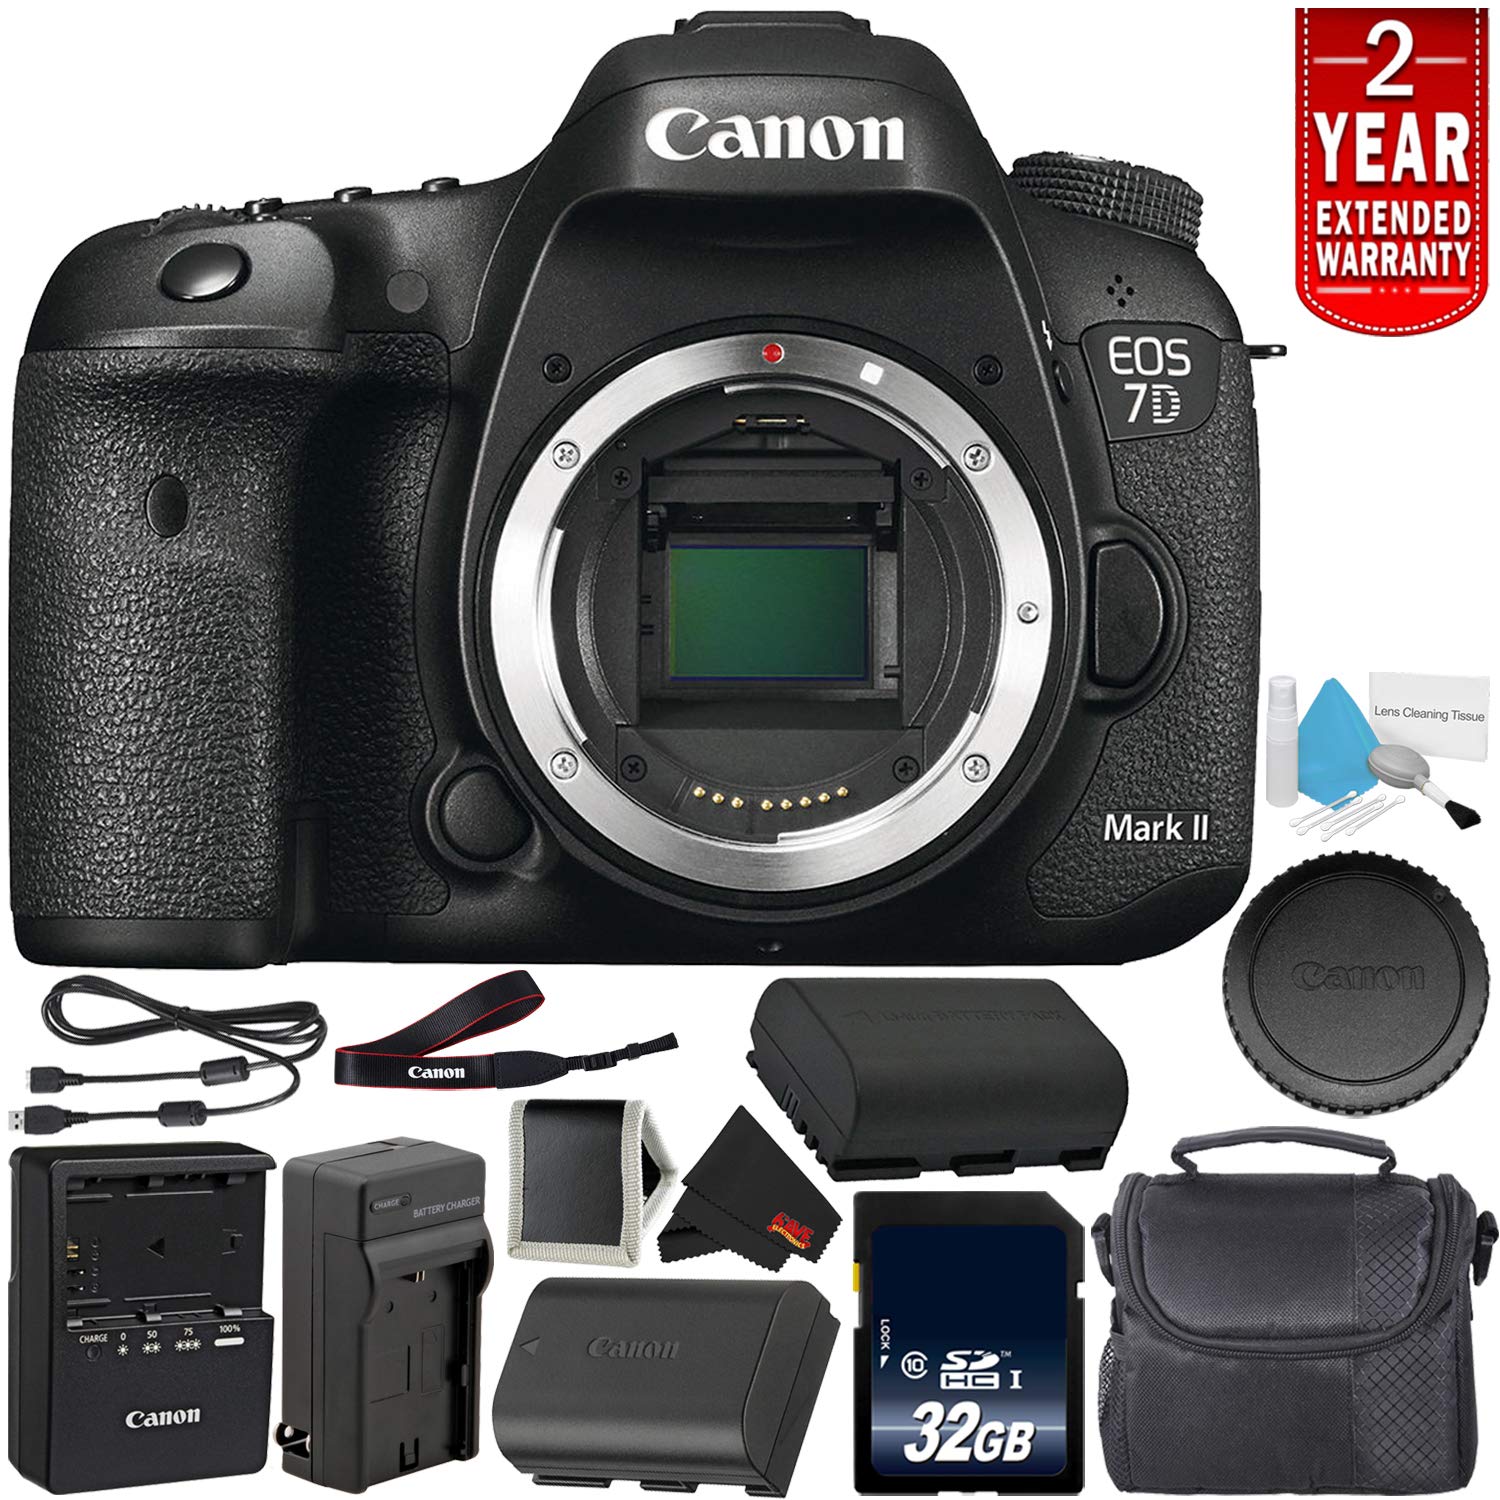 Canon EOS 7D Mark II Digital SLR Camera 9128B002 (Body Only) International Model - Bundle with 32GB Memory Card Deluxe Bundle